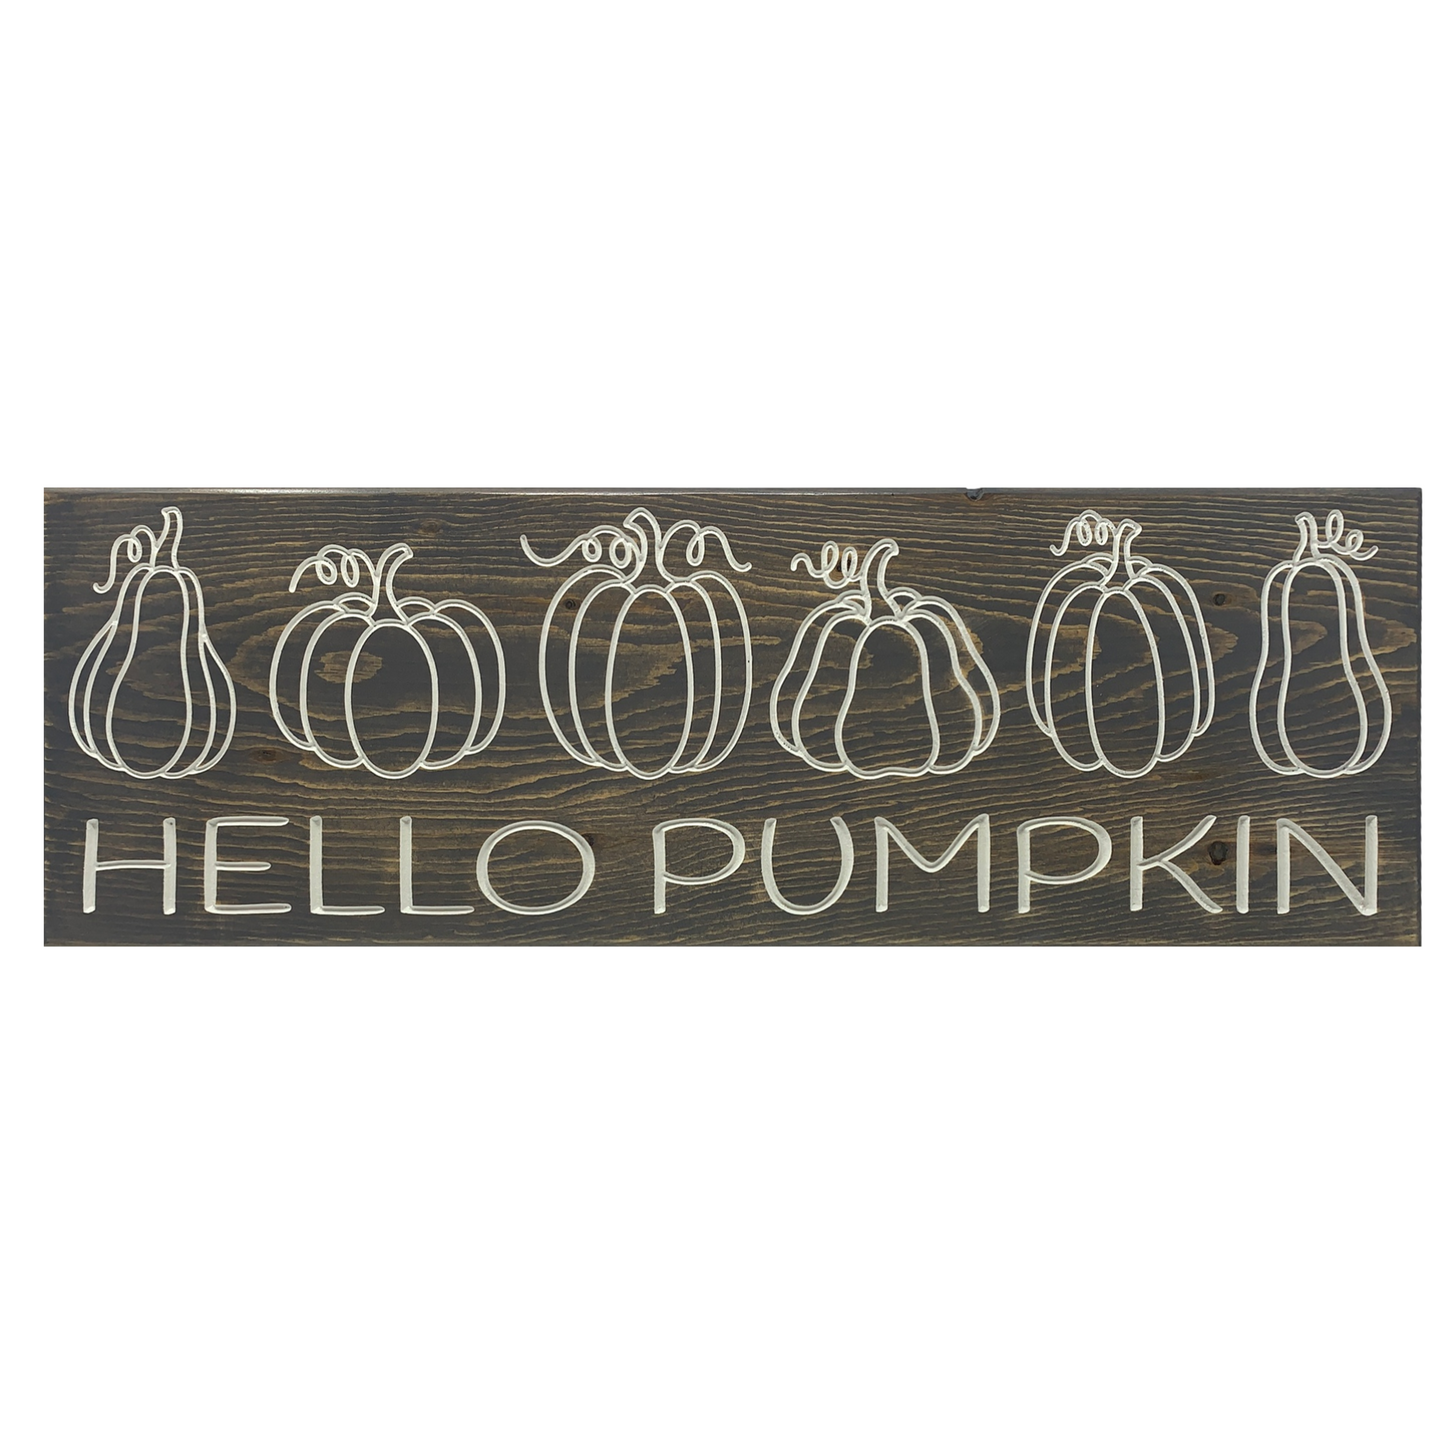 Hello Pumpkin sign